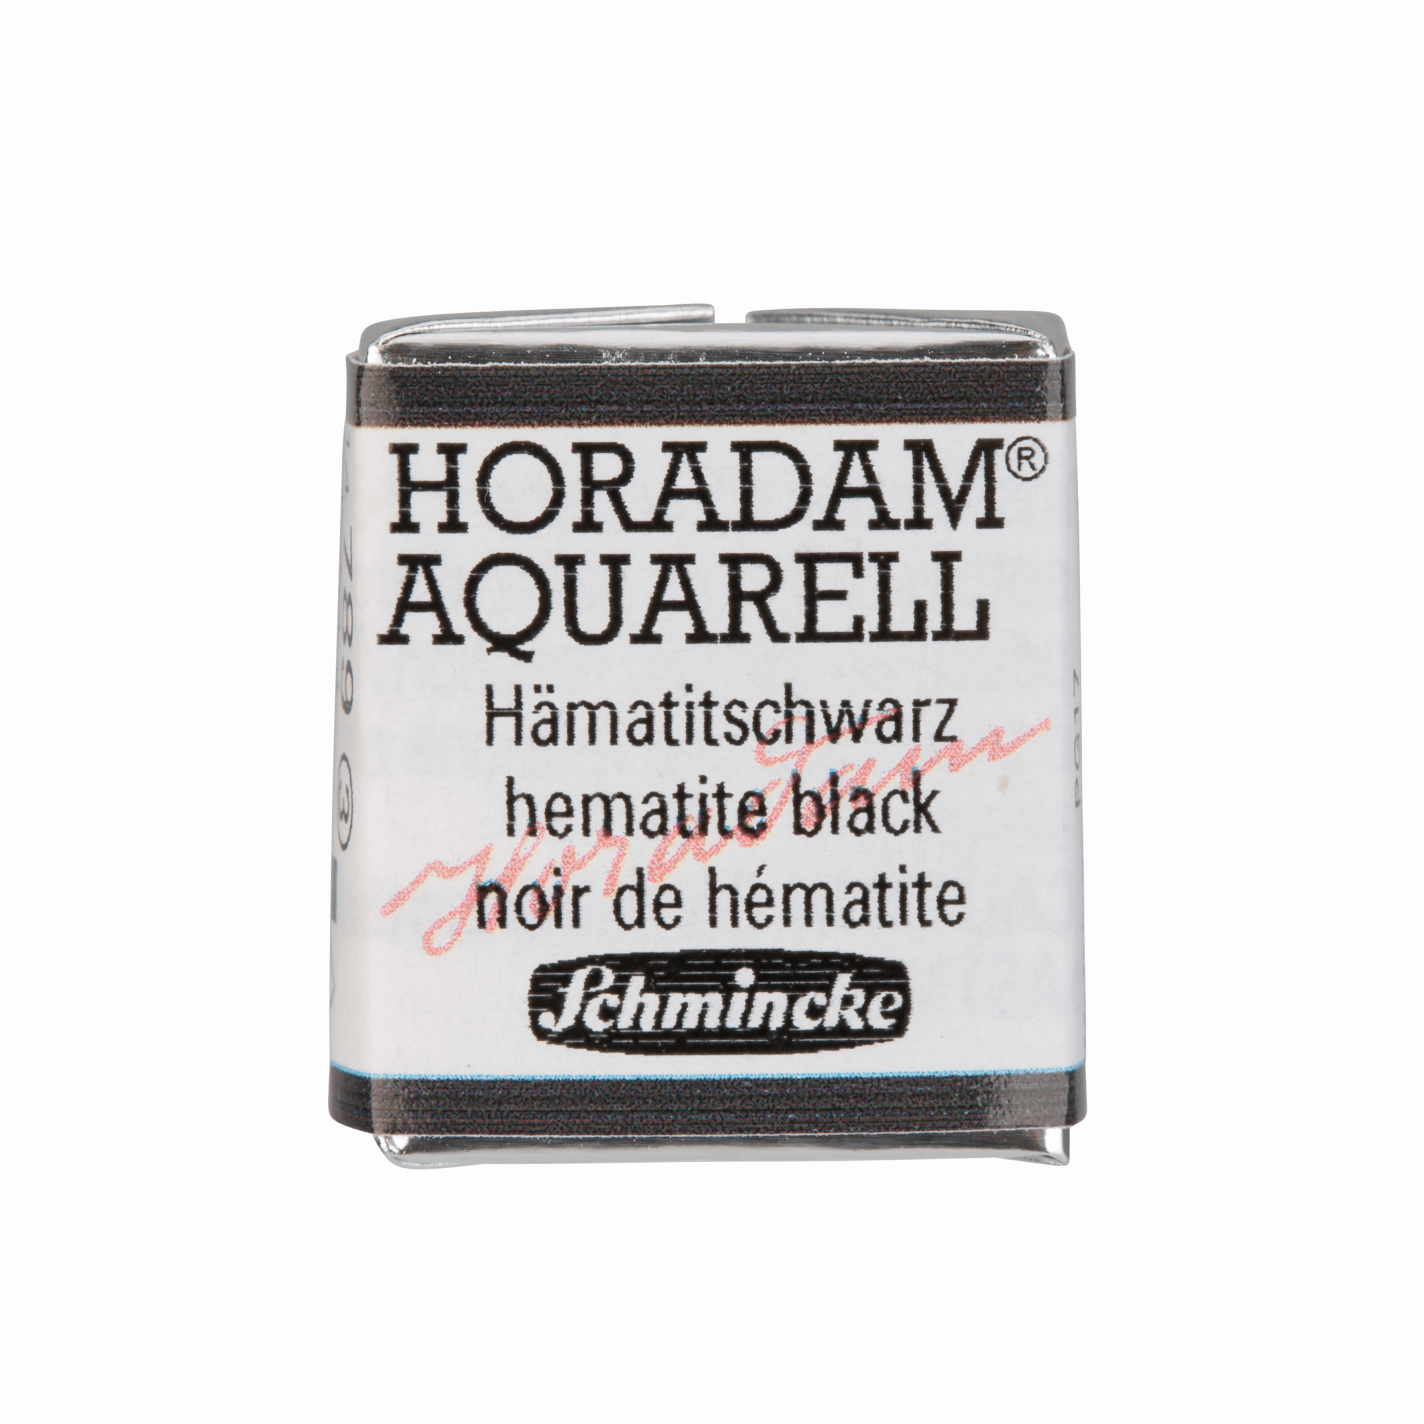 Schmincke Horadam Aquarell pans 1/2 pan Hematite Black